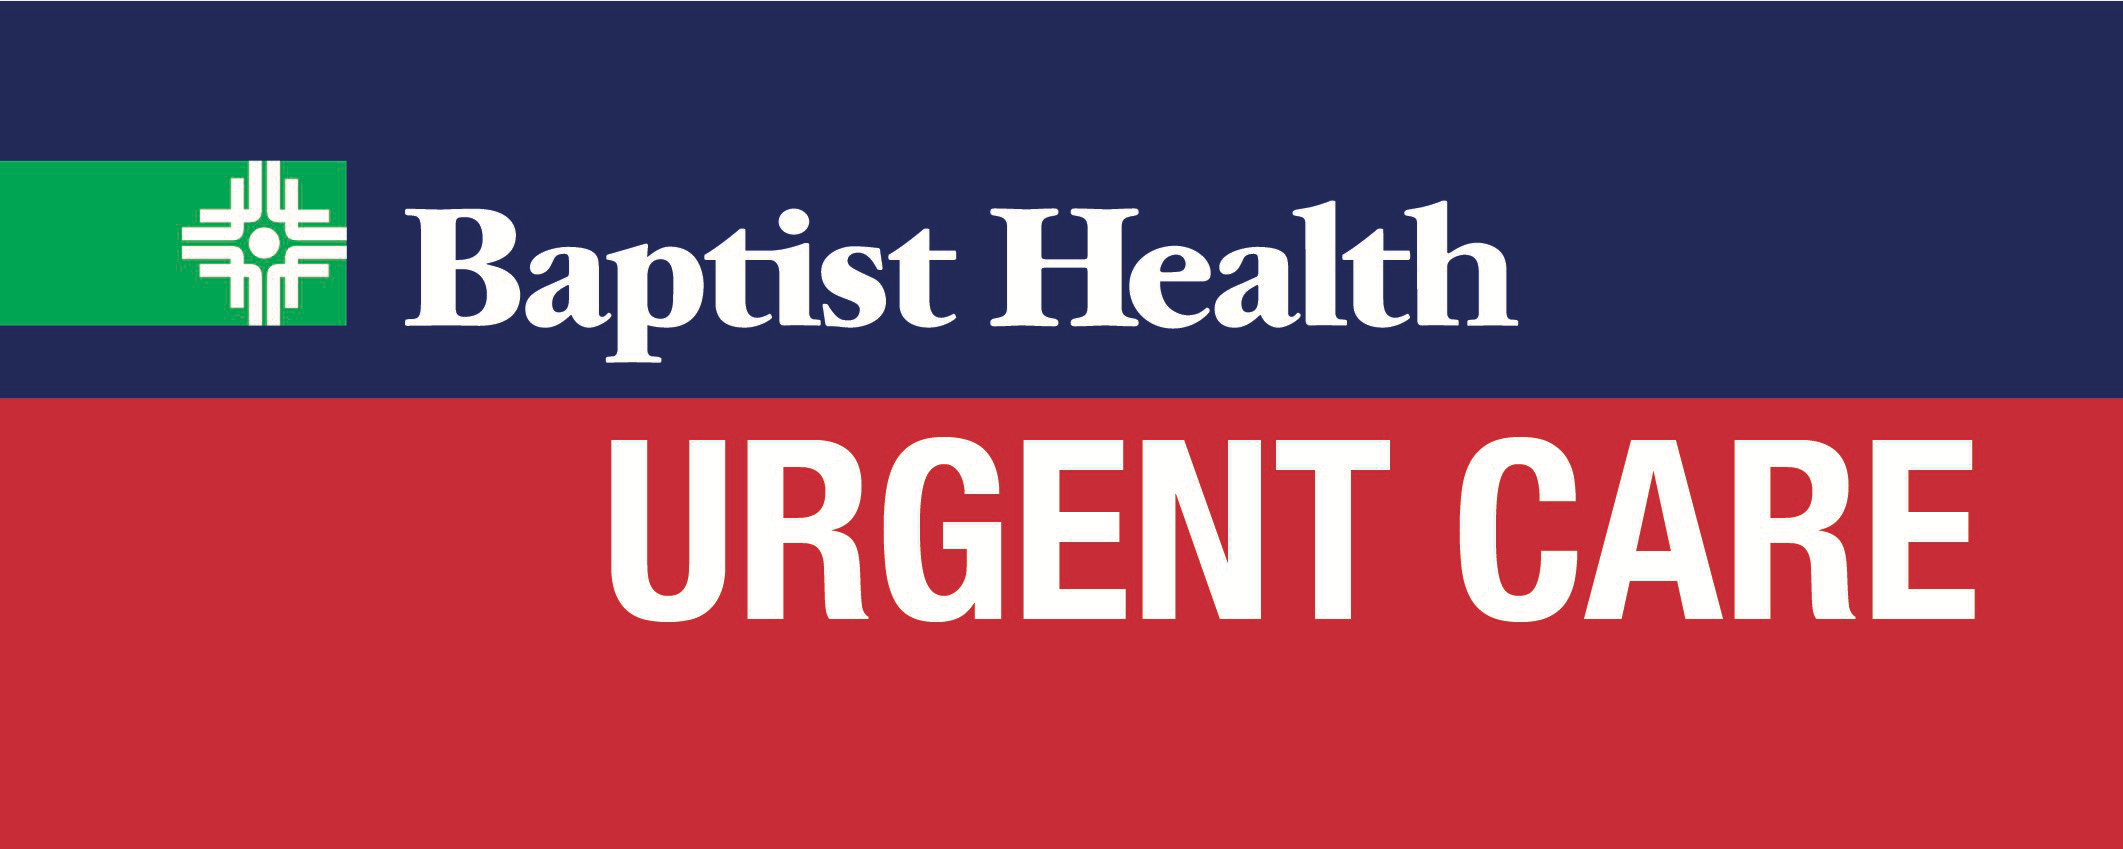 Baptist Health Urgent Care - Hot Springs Logo